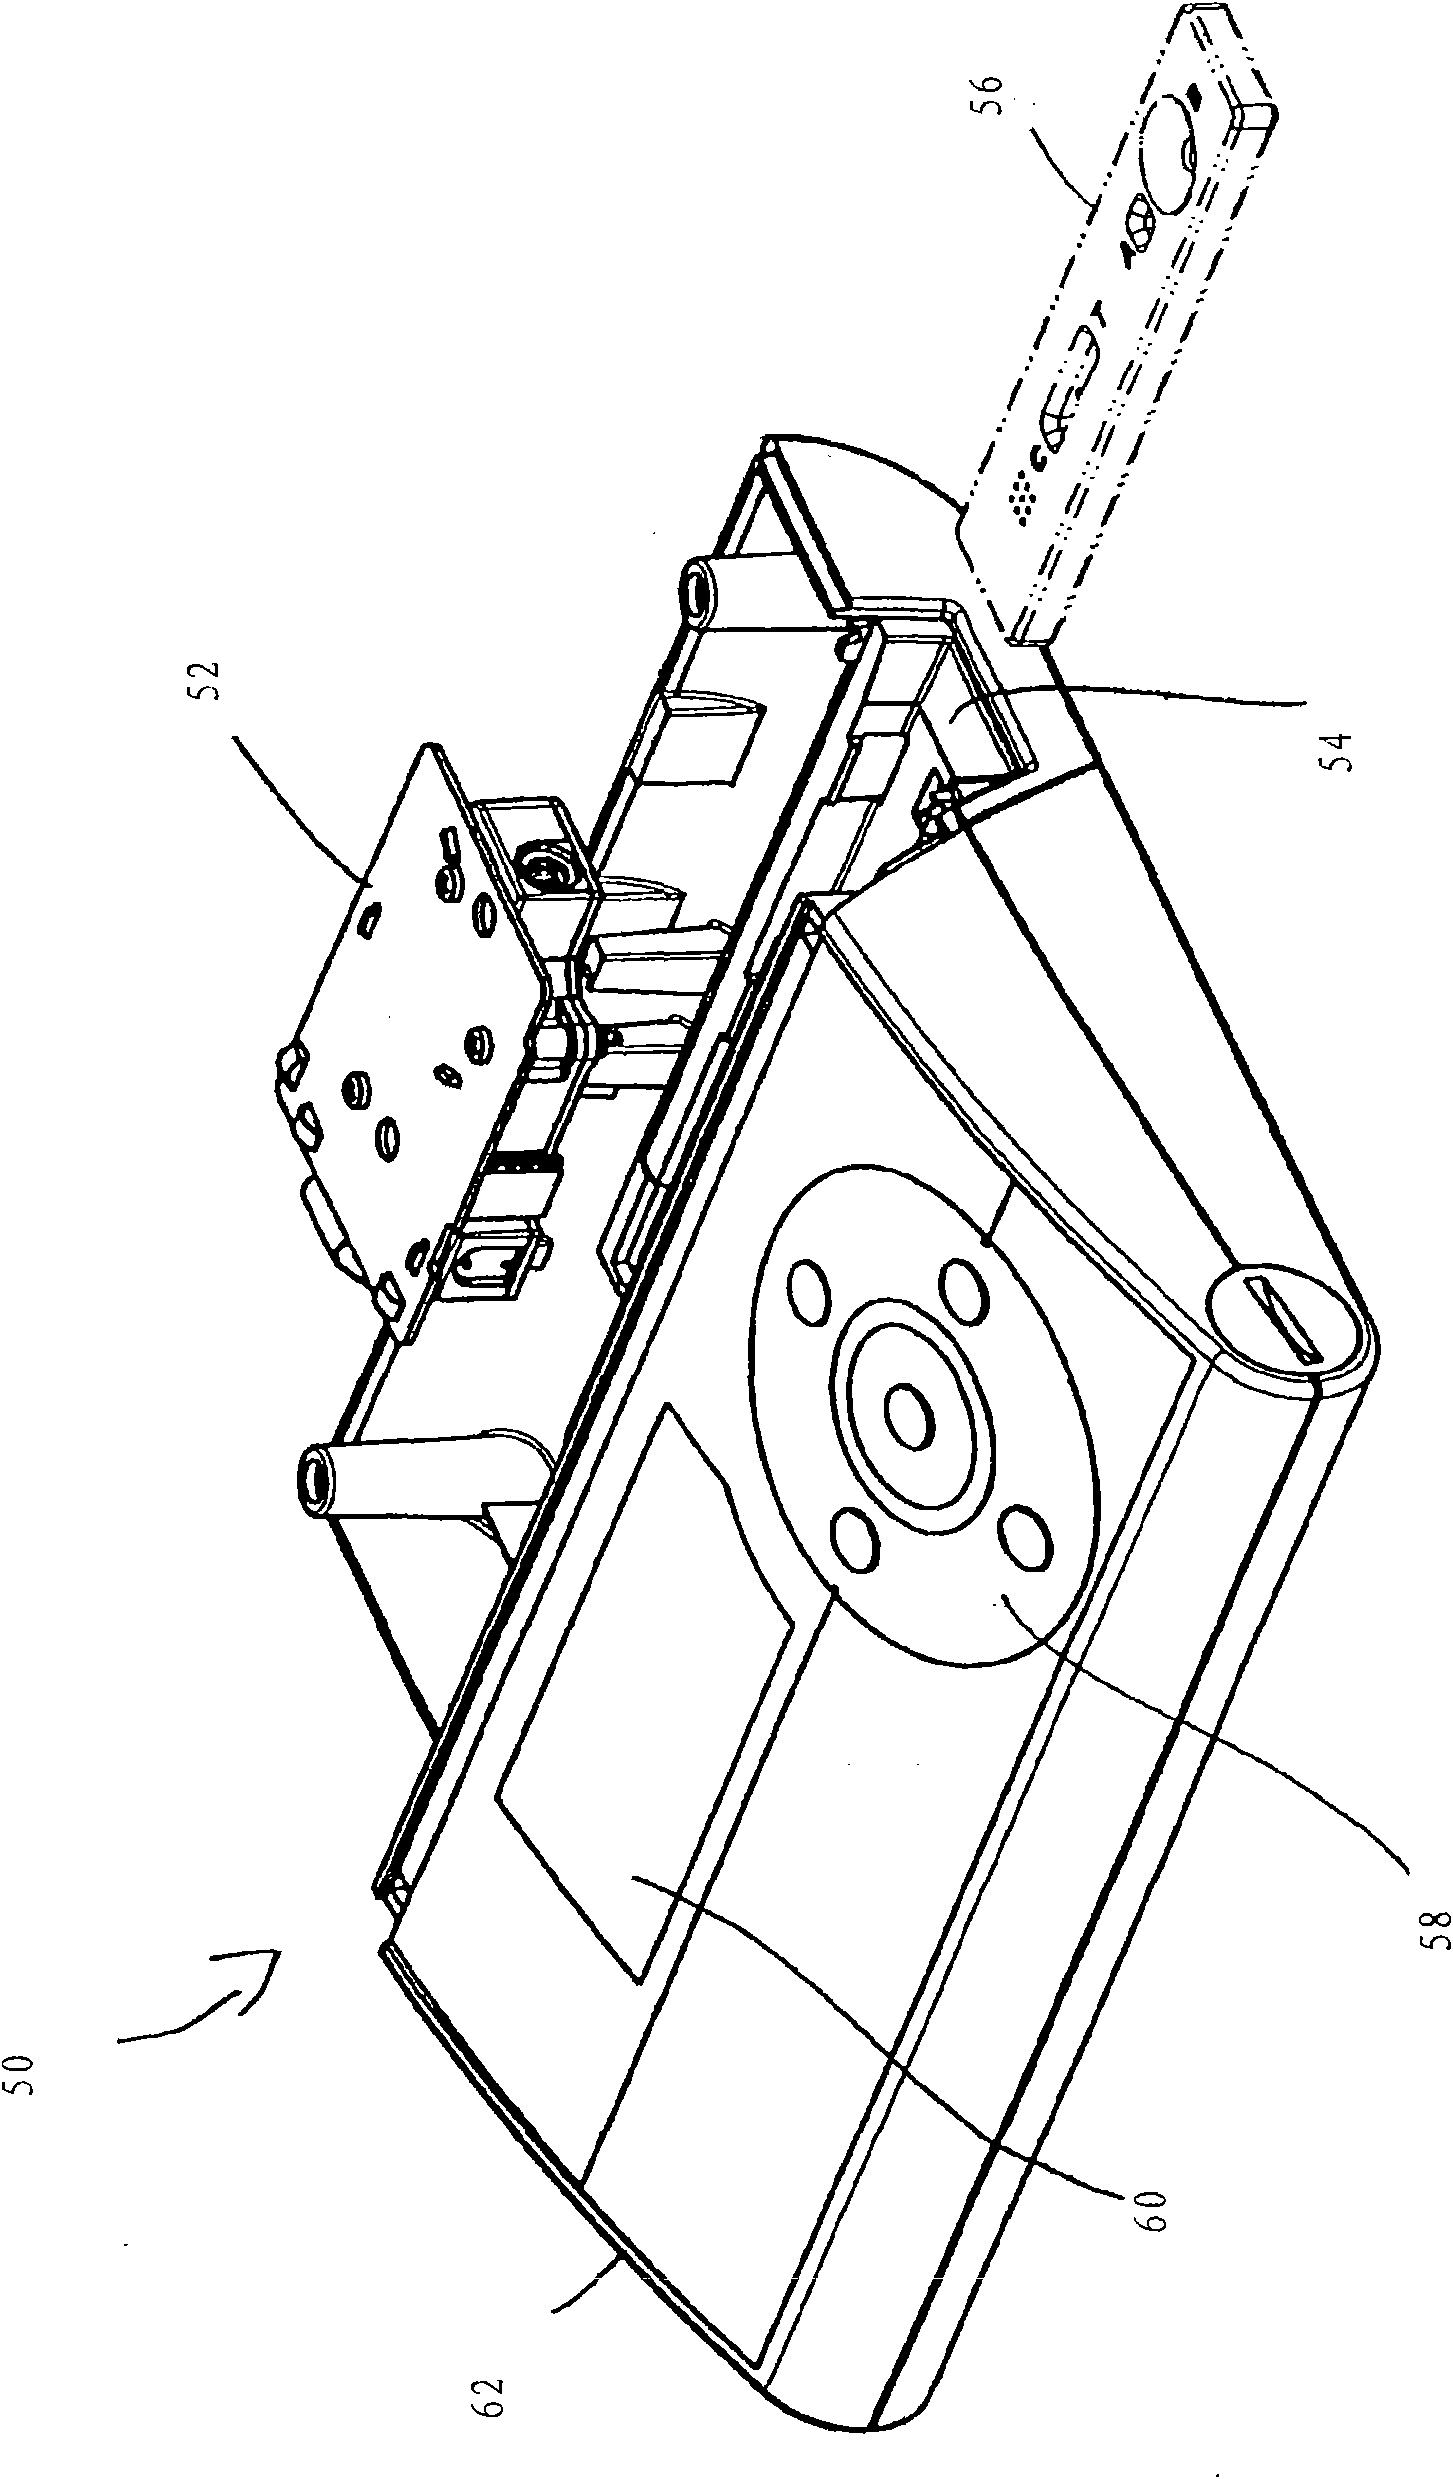 Optical measuring instrument